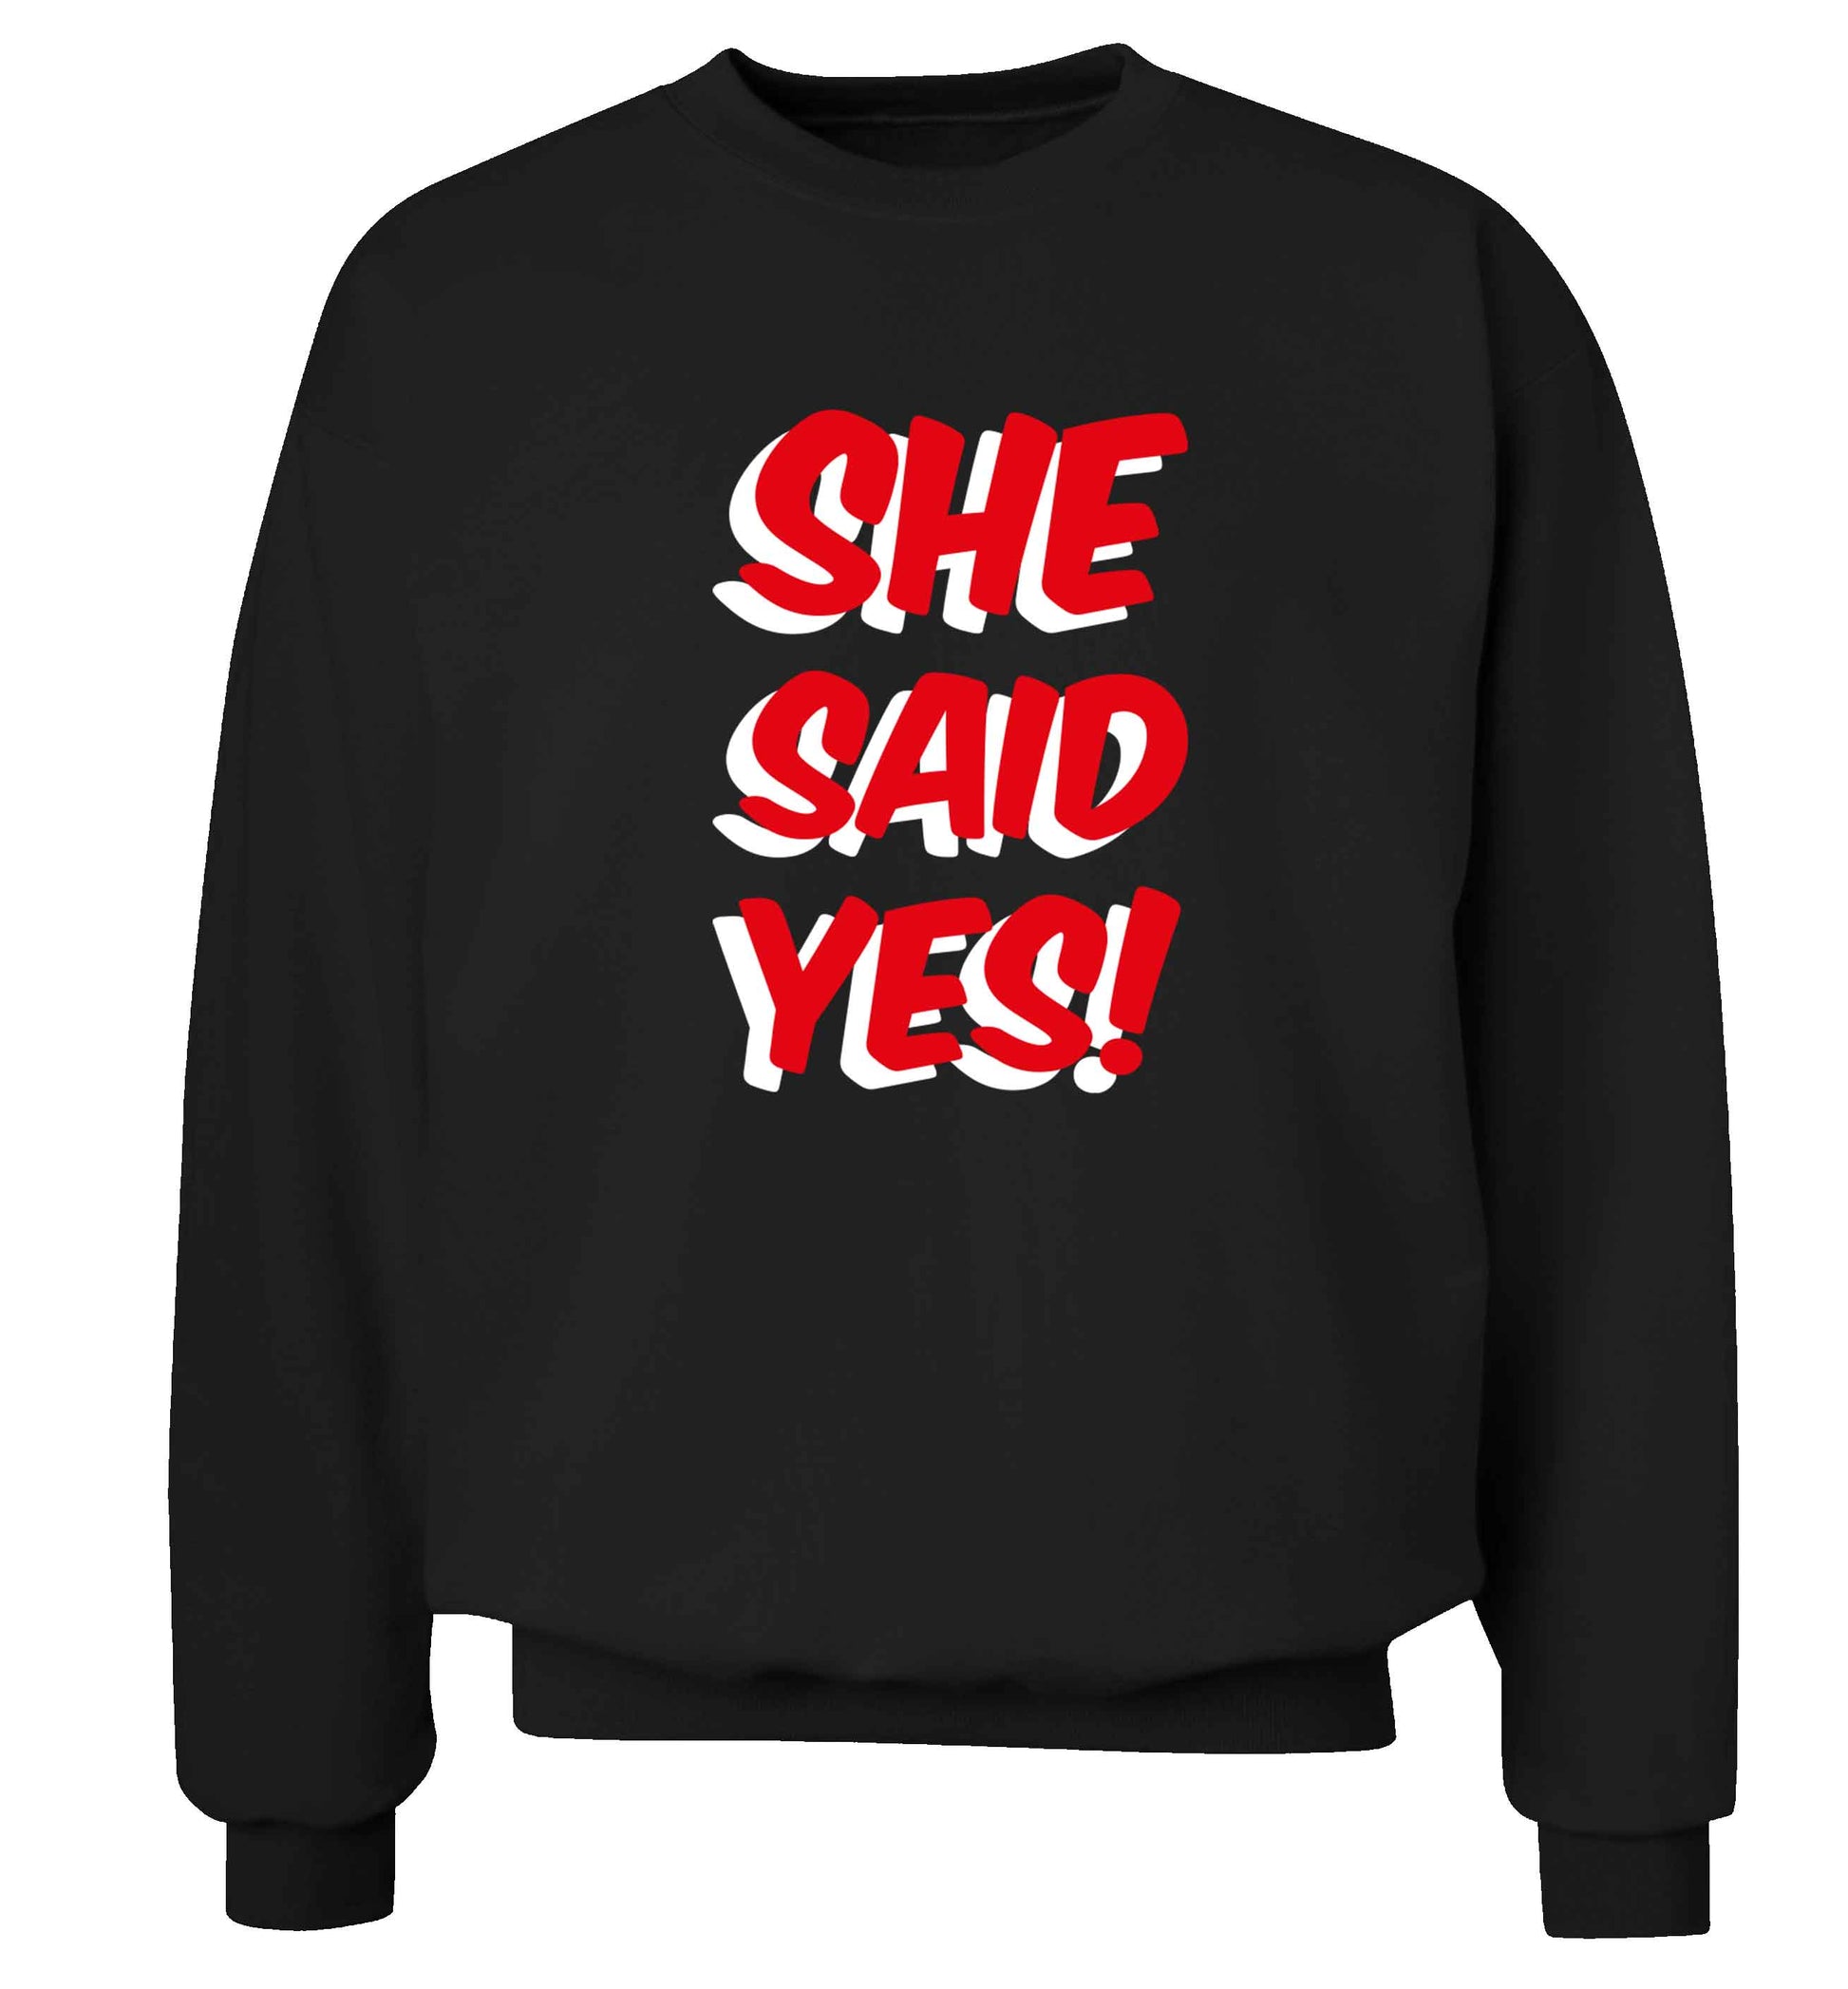 She said yes adult's unisex black sweater 2XL